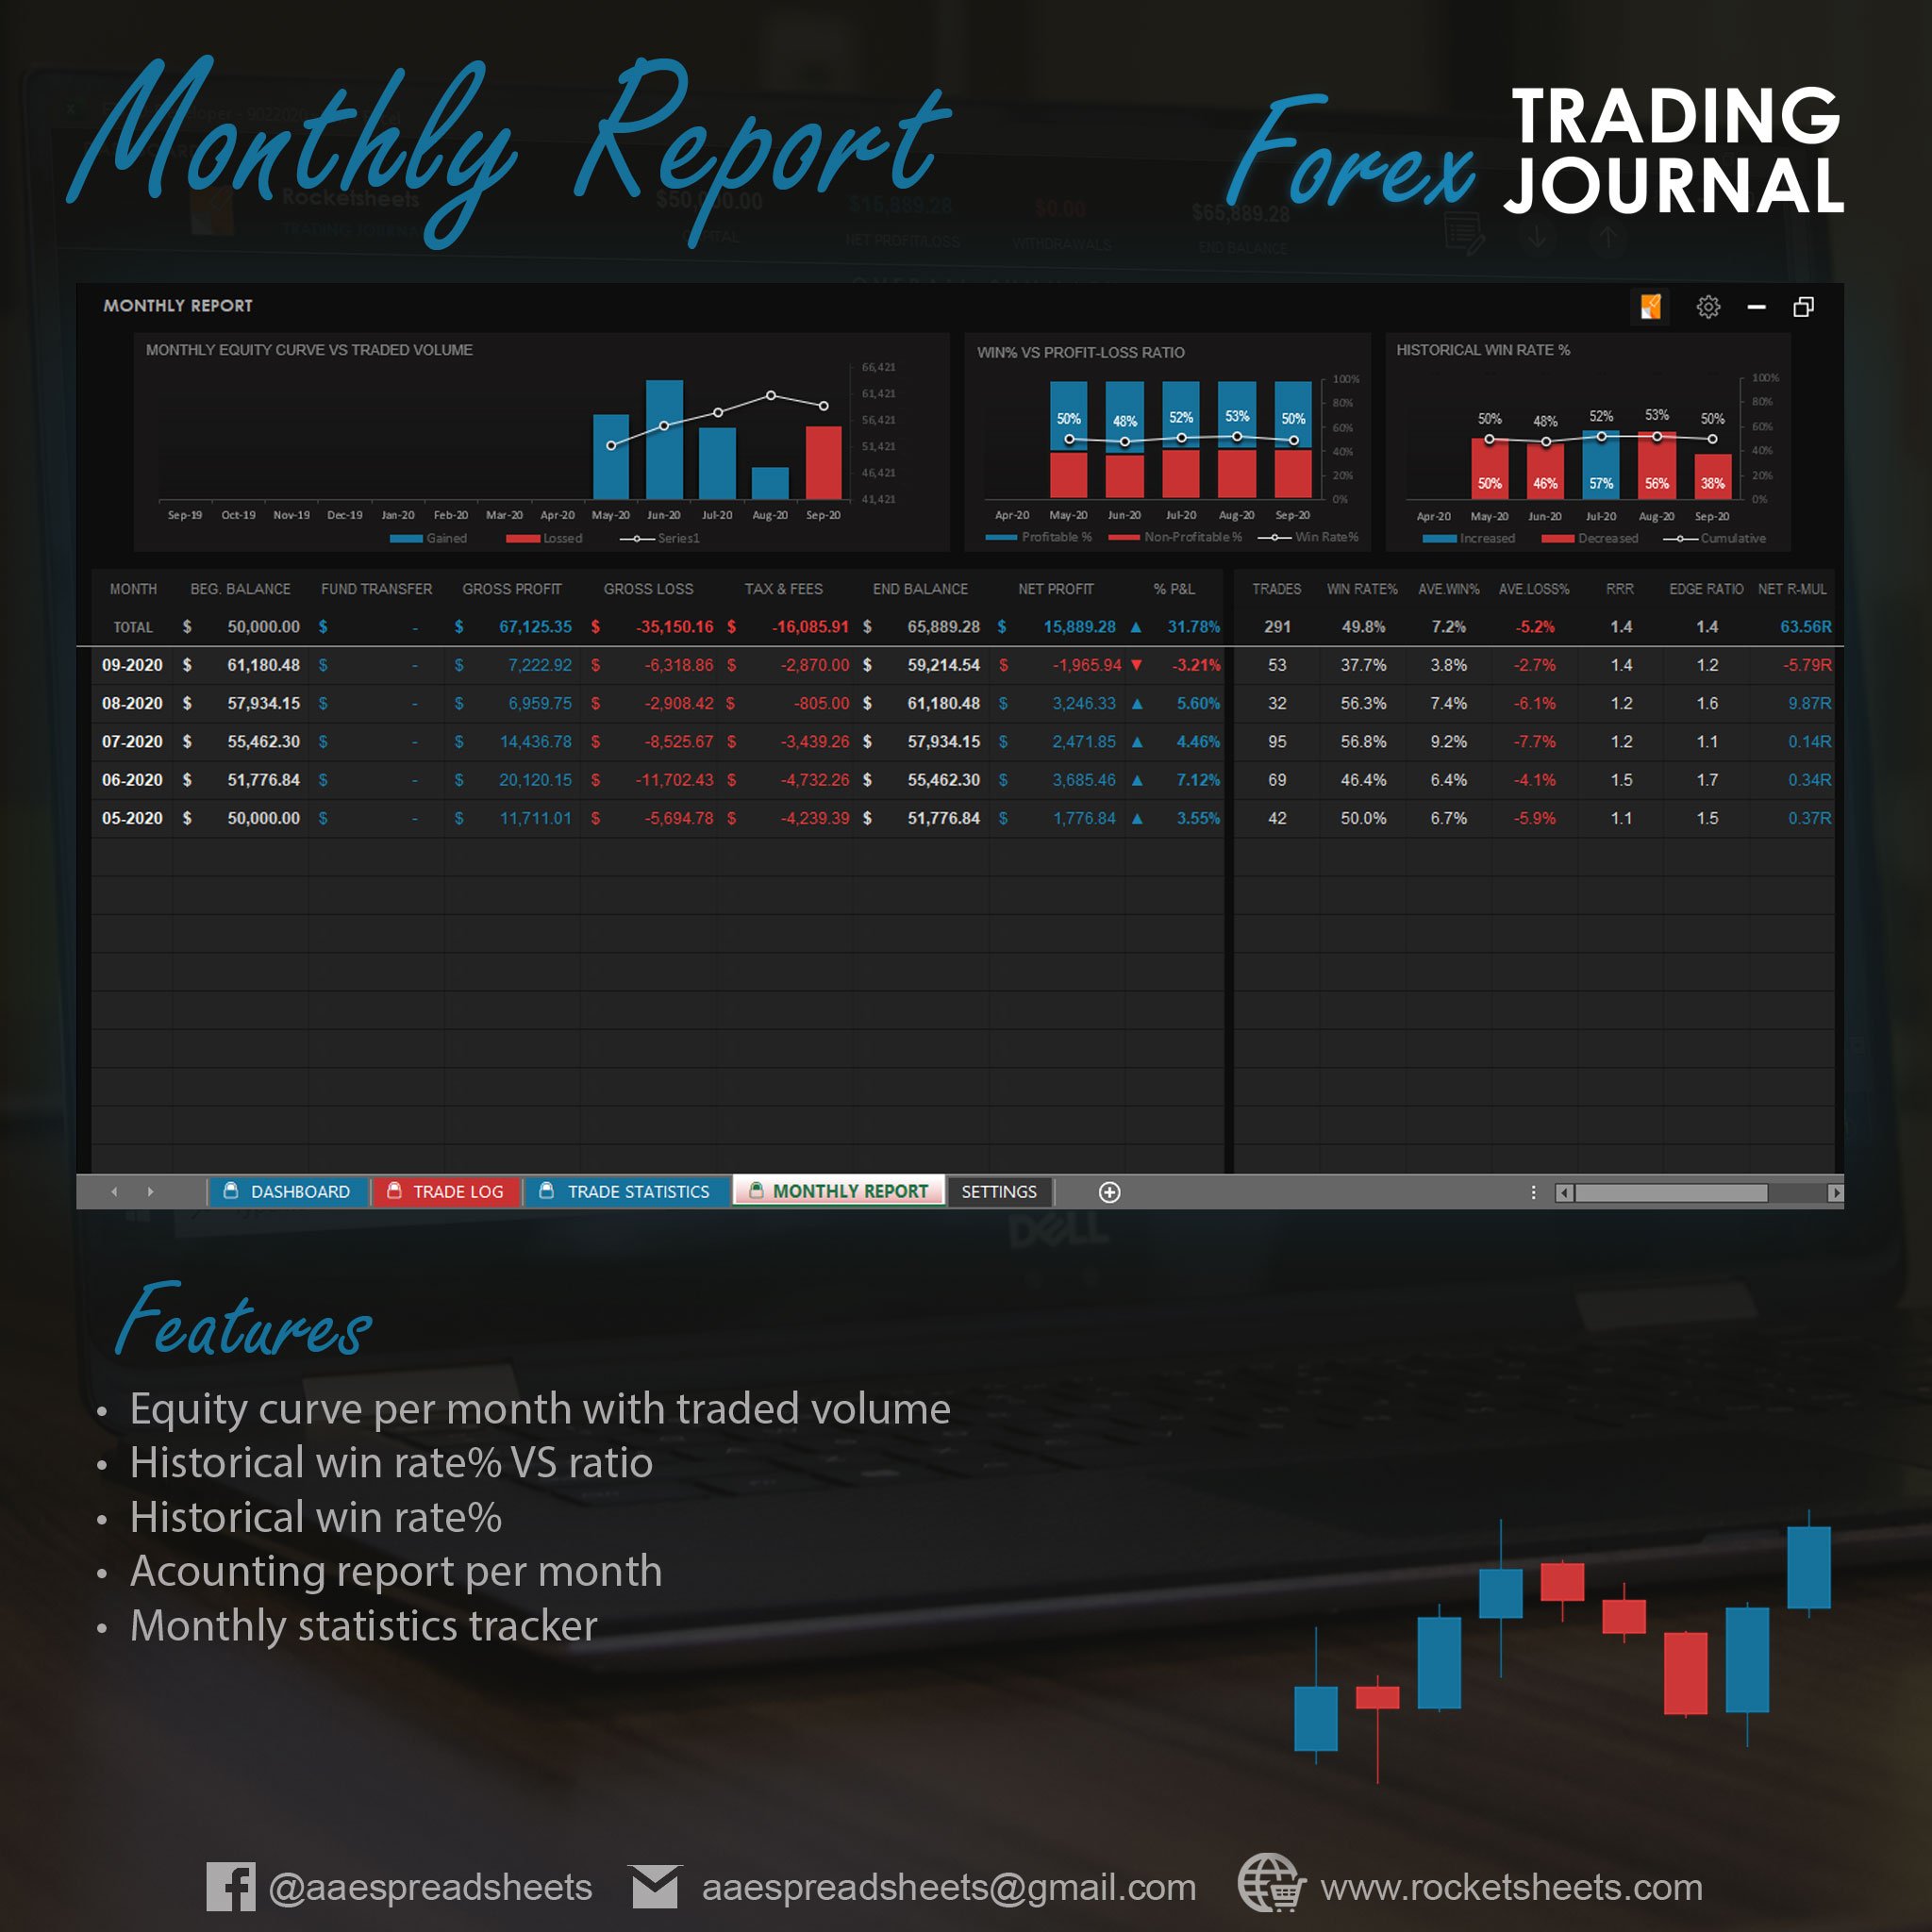 Forex trading journal spreadsheet download